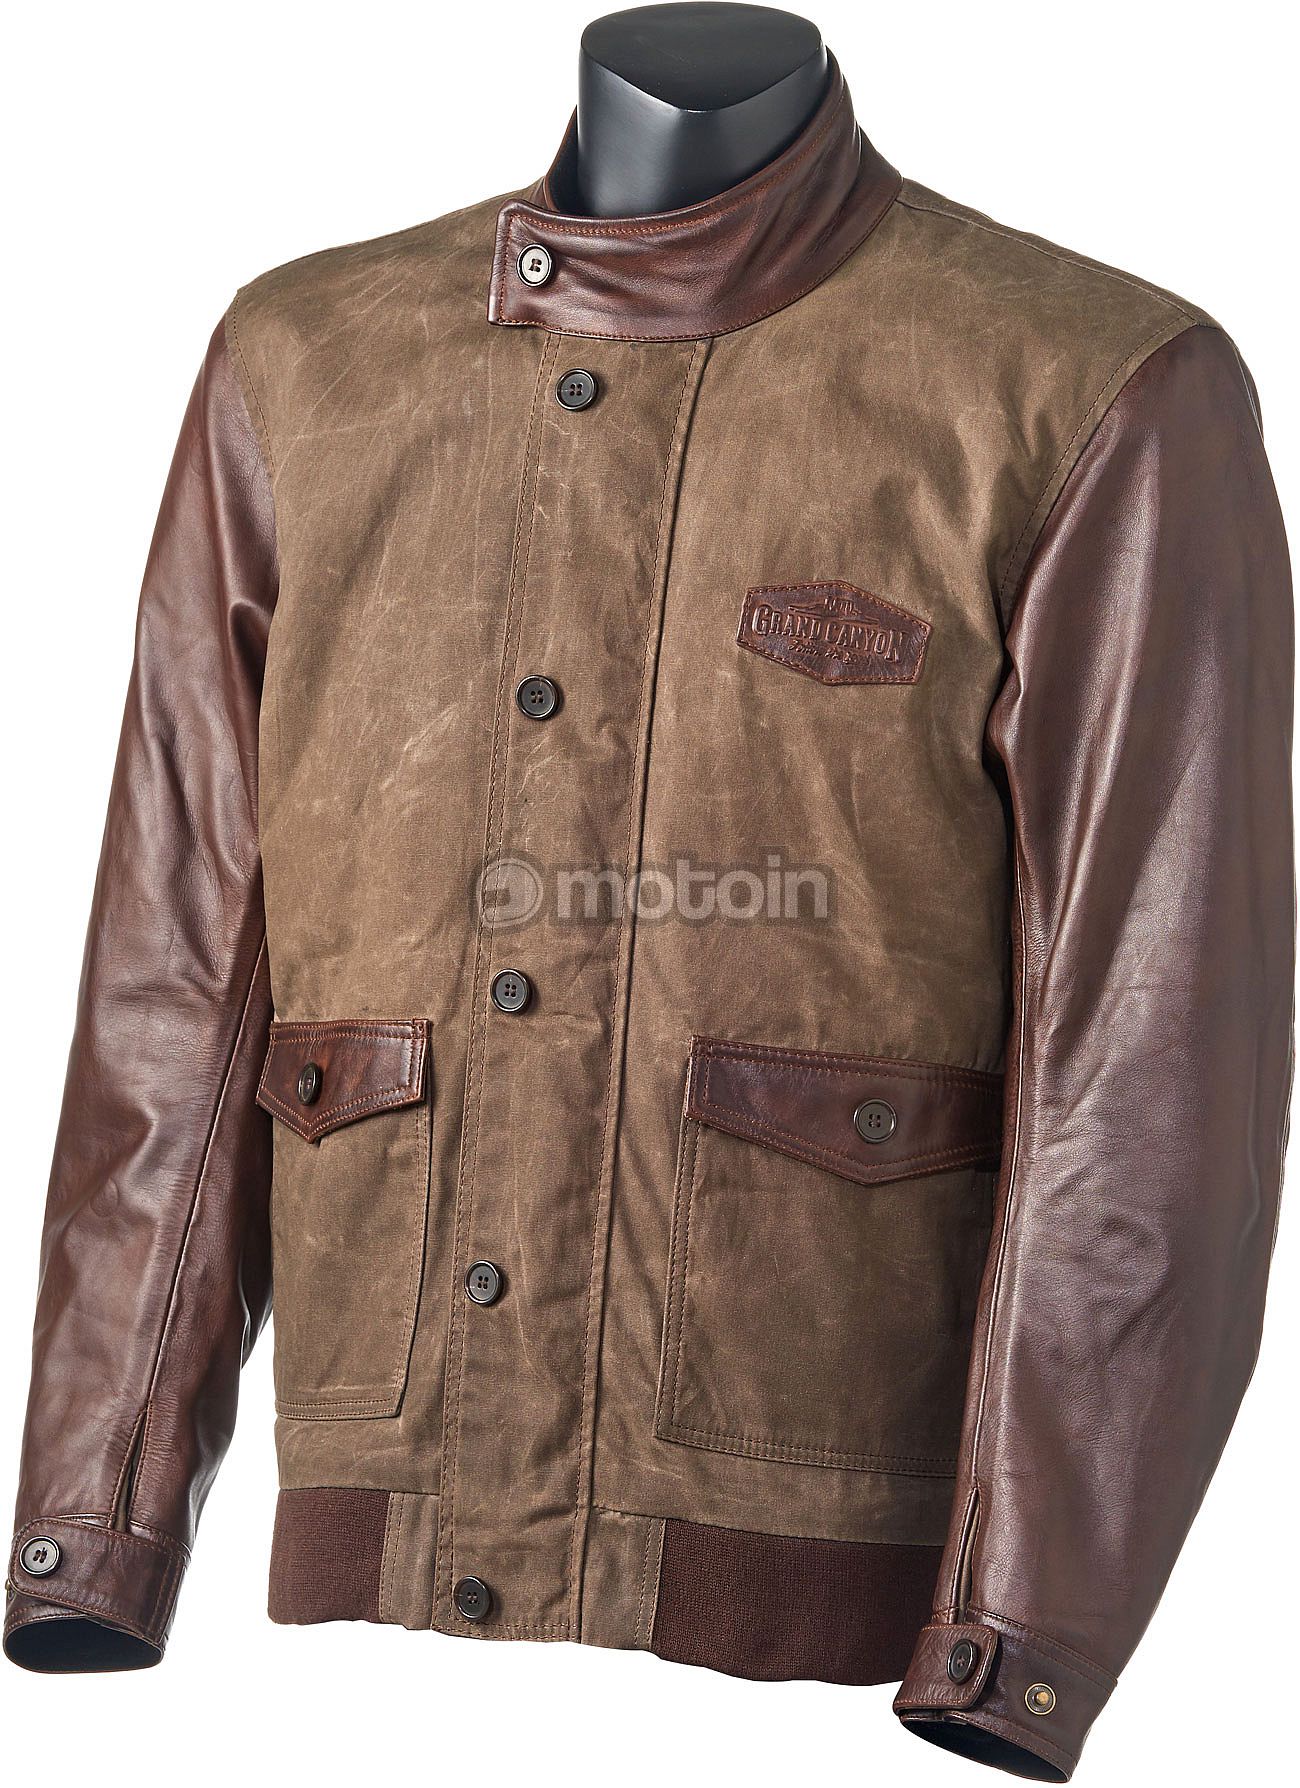 GC Bikewear Hillberry, leather- textile jacket